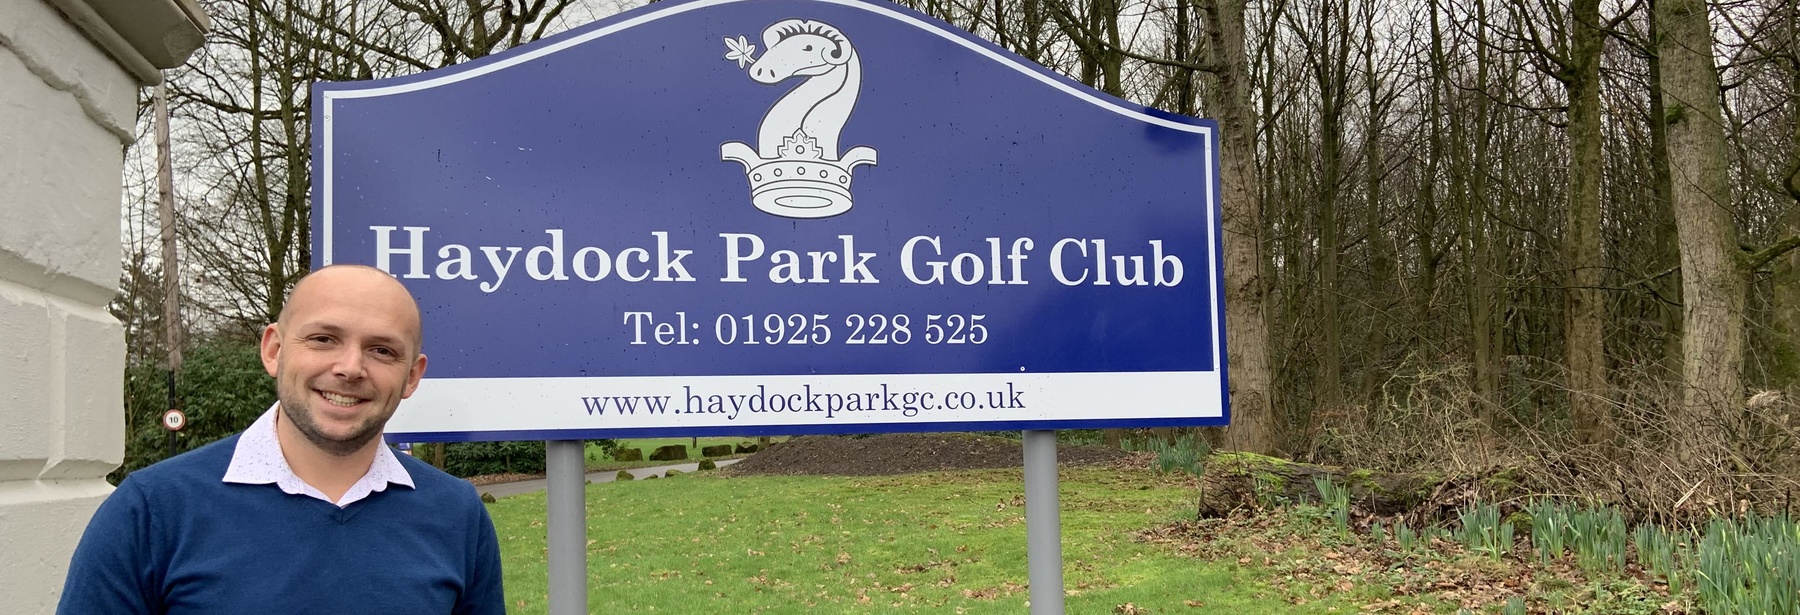 Stephen Nicholsoncrop Haydock Park Golf Club